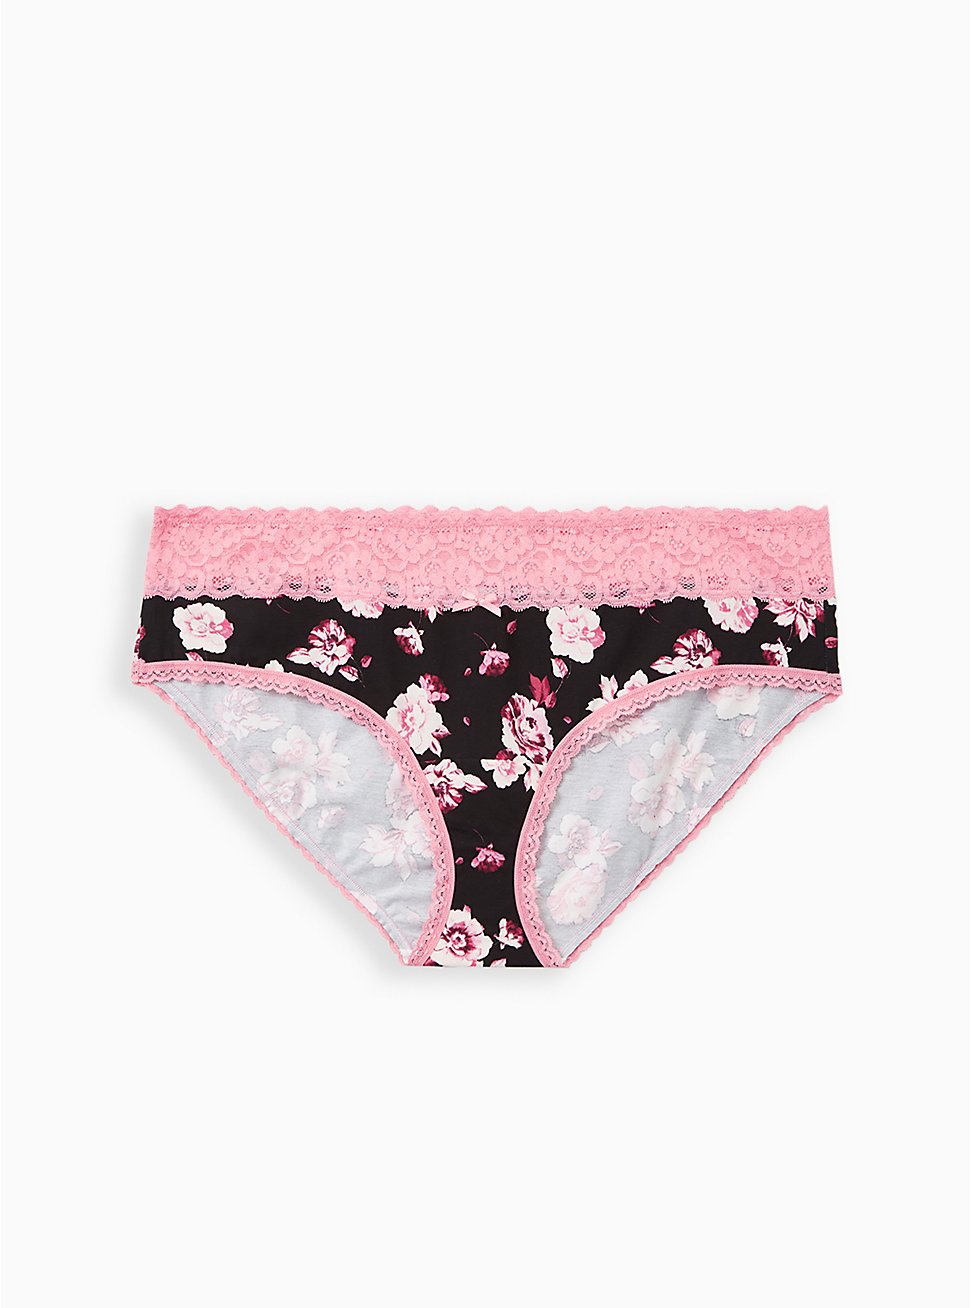 Plus Size Wide Lace Hipster Panty - Cotton Floral Black + Pink, MULTI FORAL, hi-res